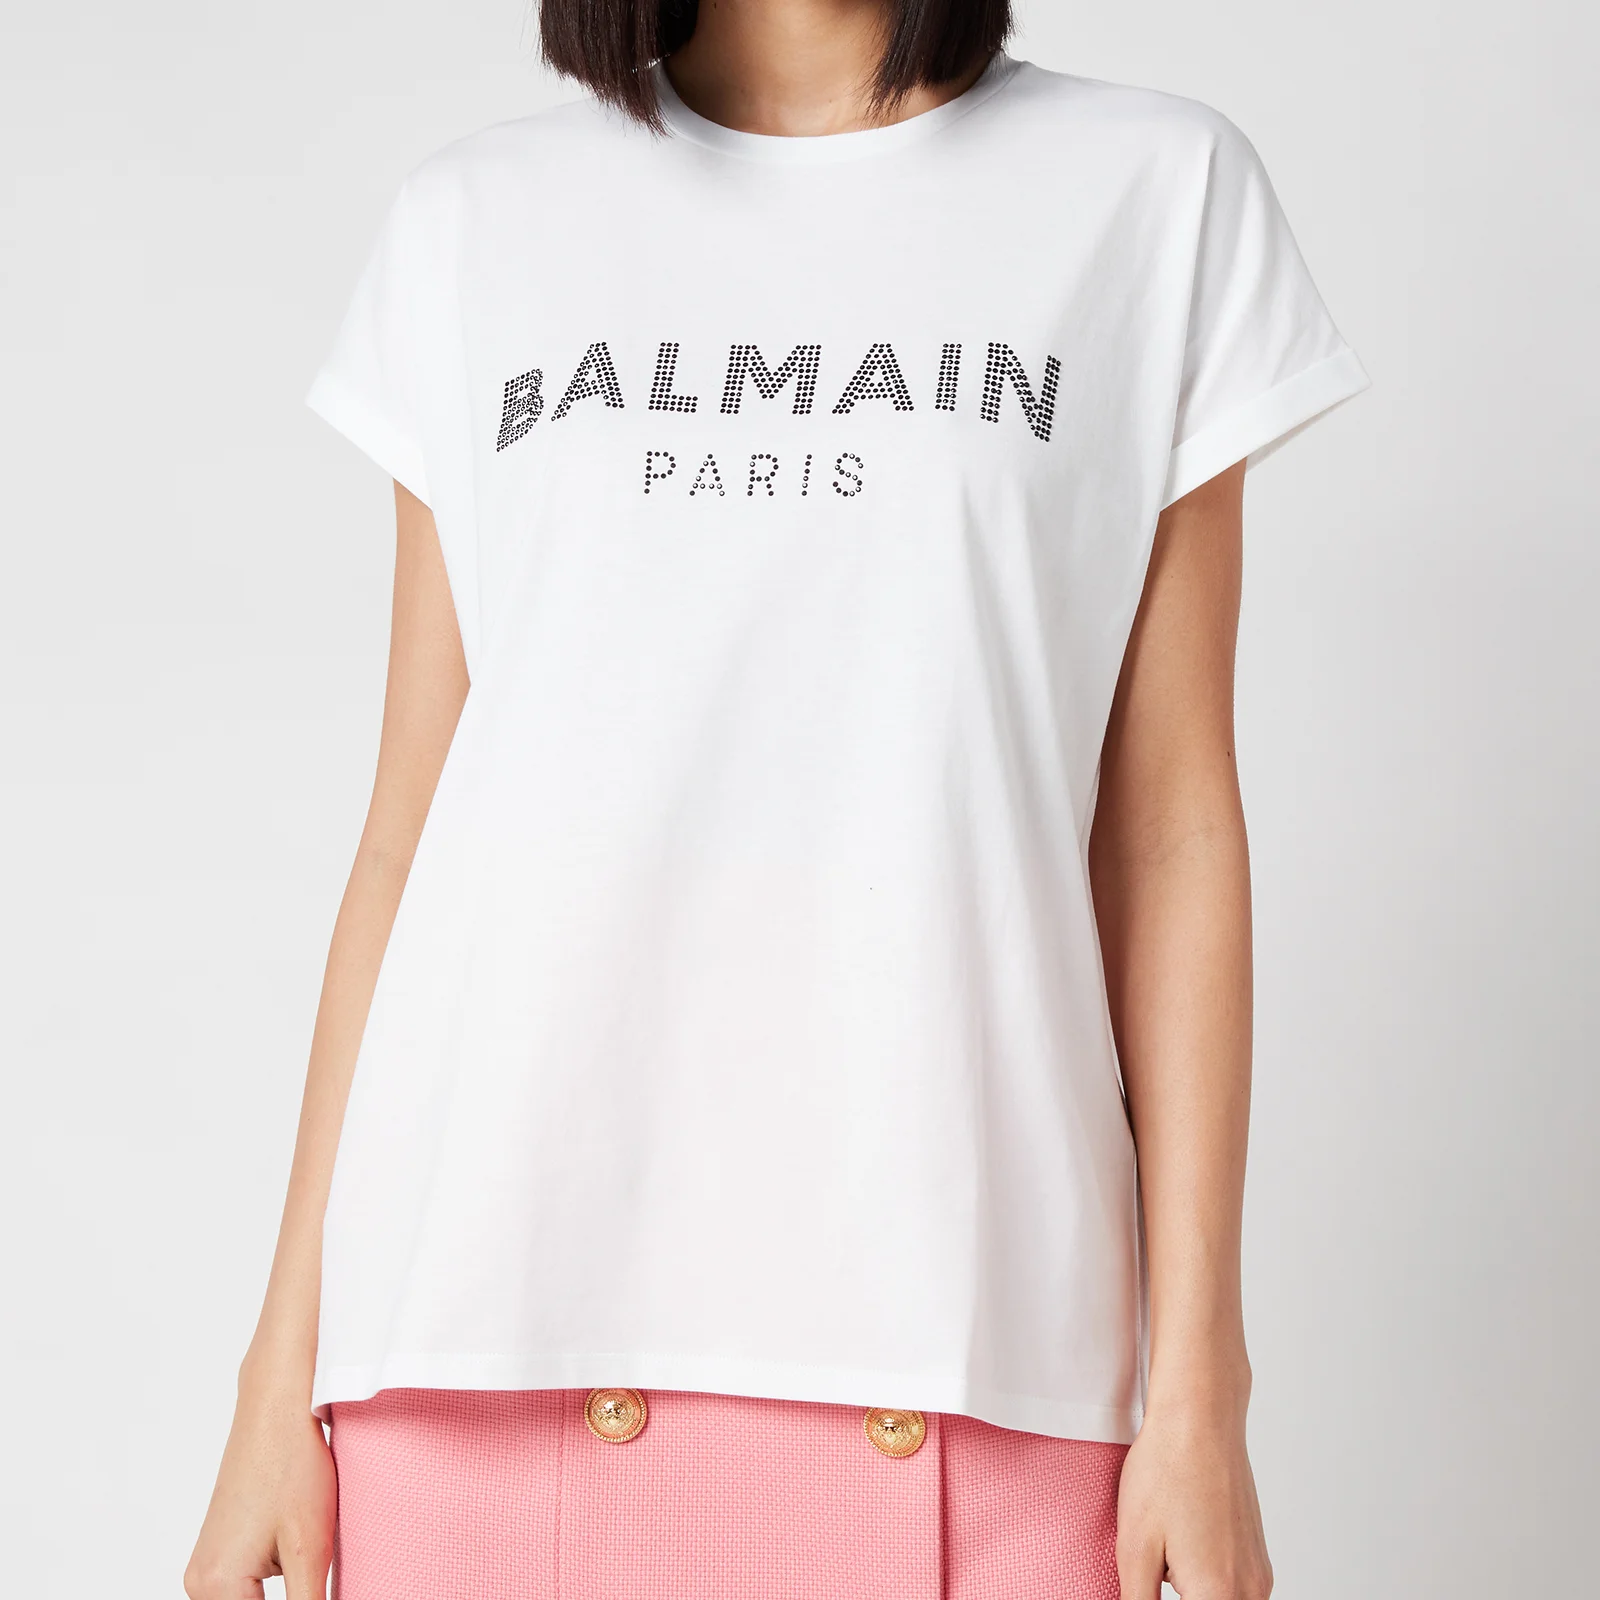 Balmain Women's Strass Logo T-Shirt - Blanc/Noir Image 1